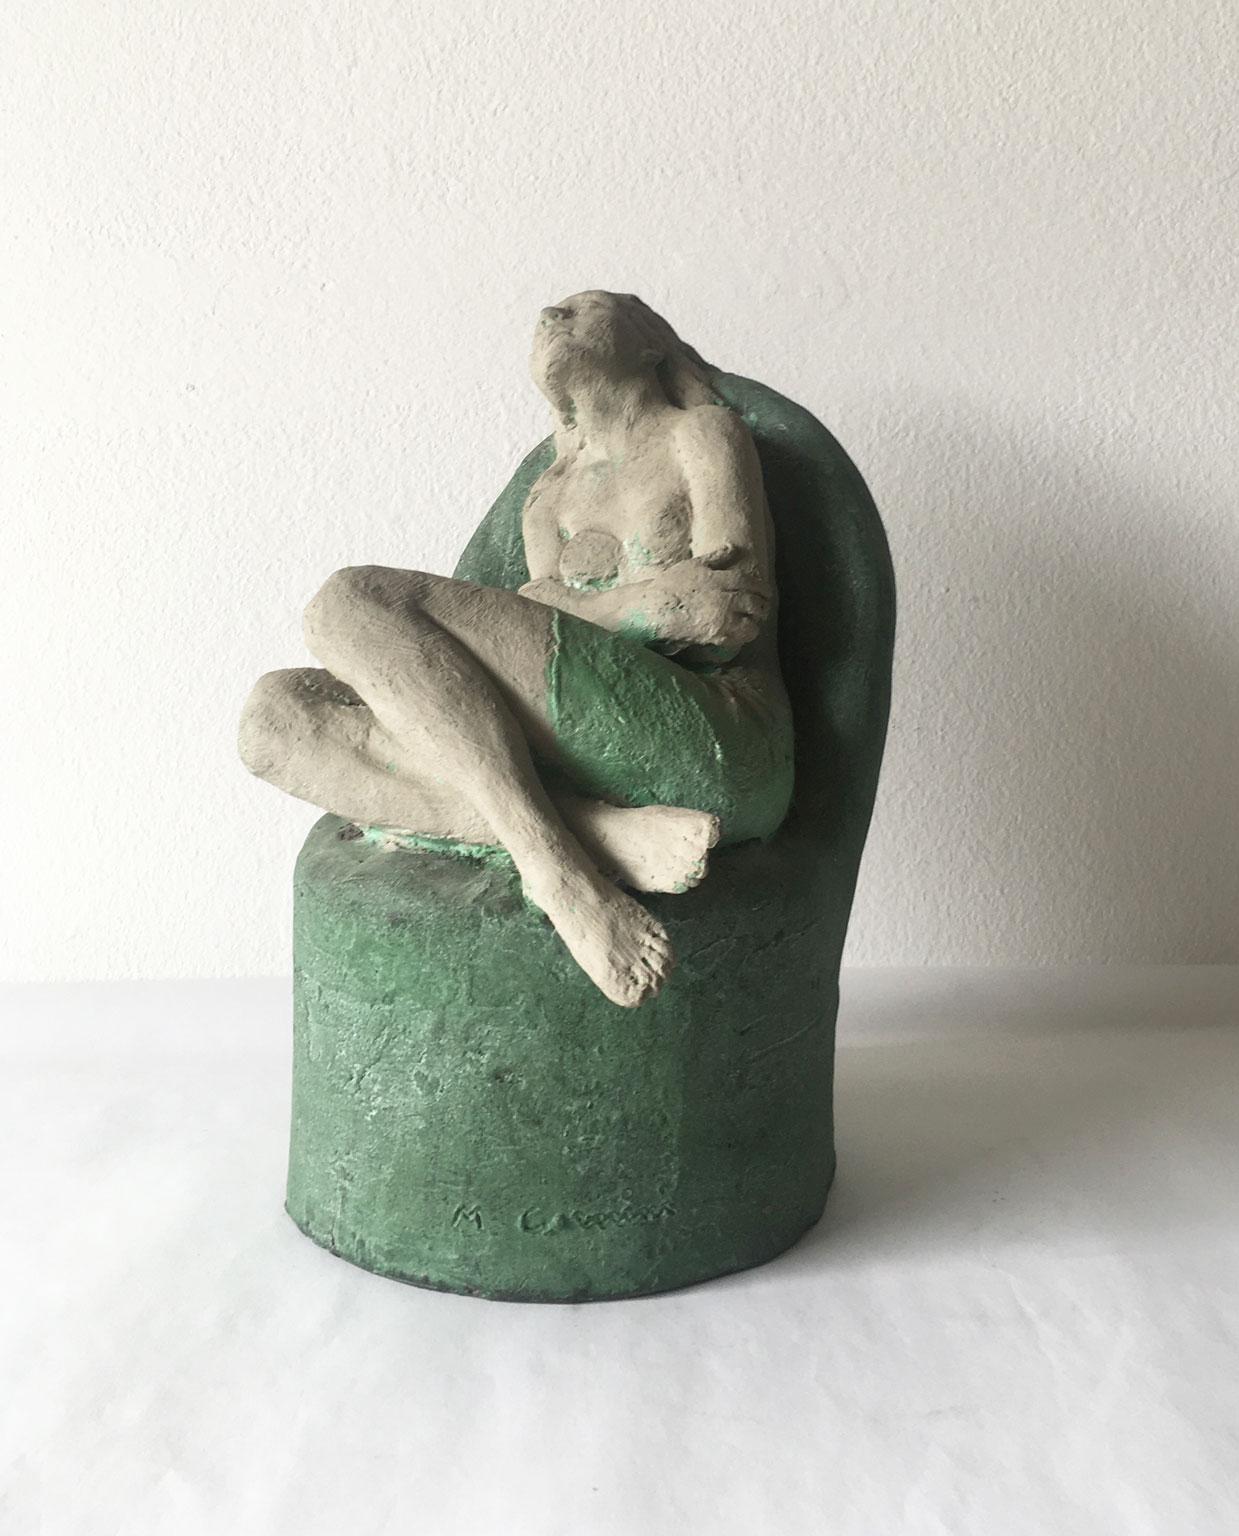 1998 Italy Bronze Woman Figurine Sculpture by Marco Cornini Attesa For Sale 6